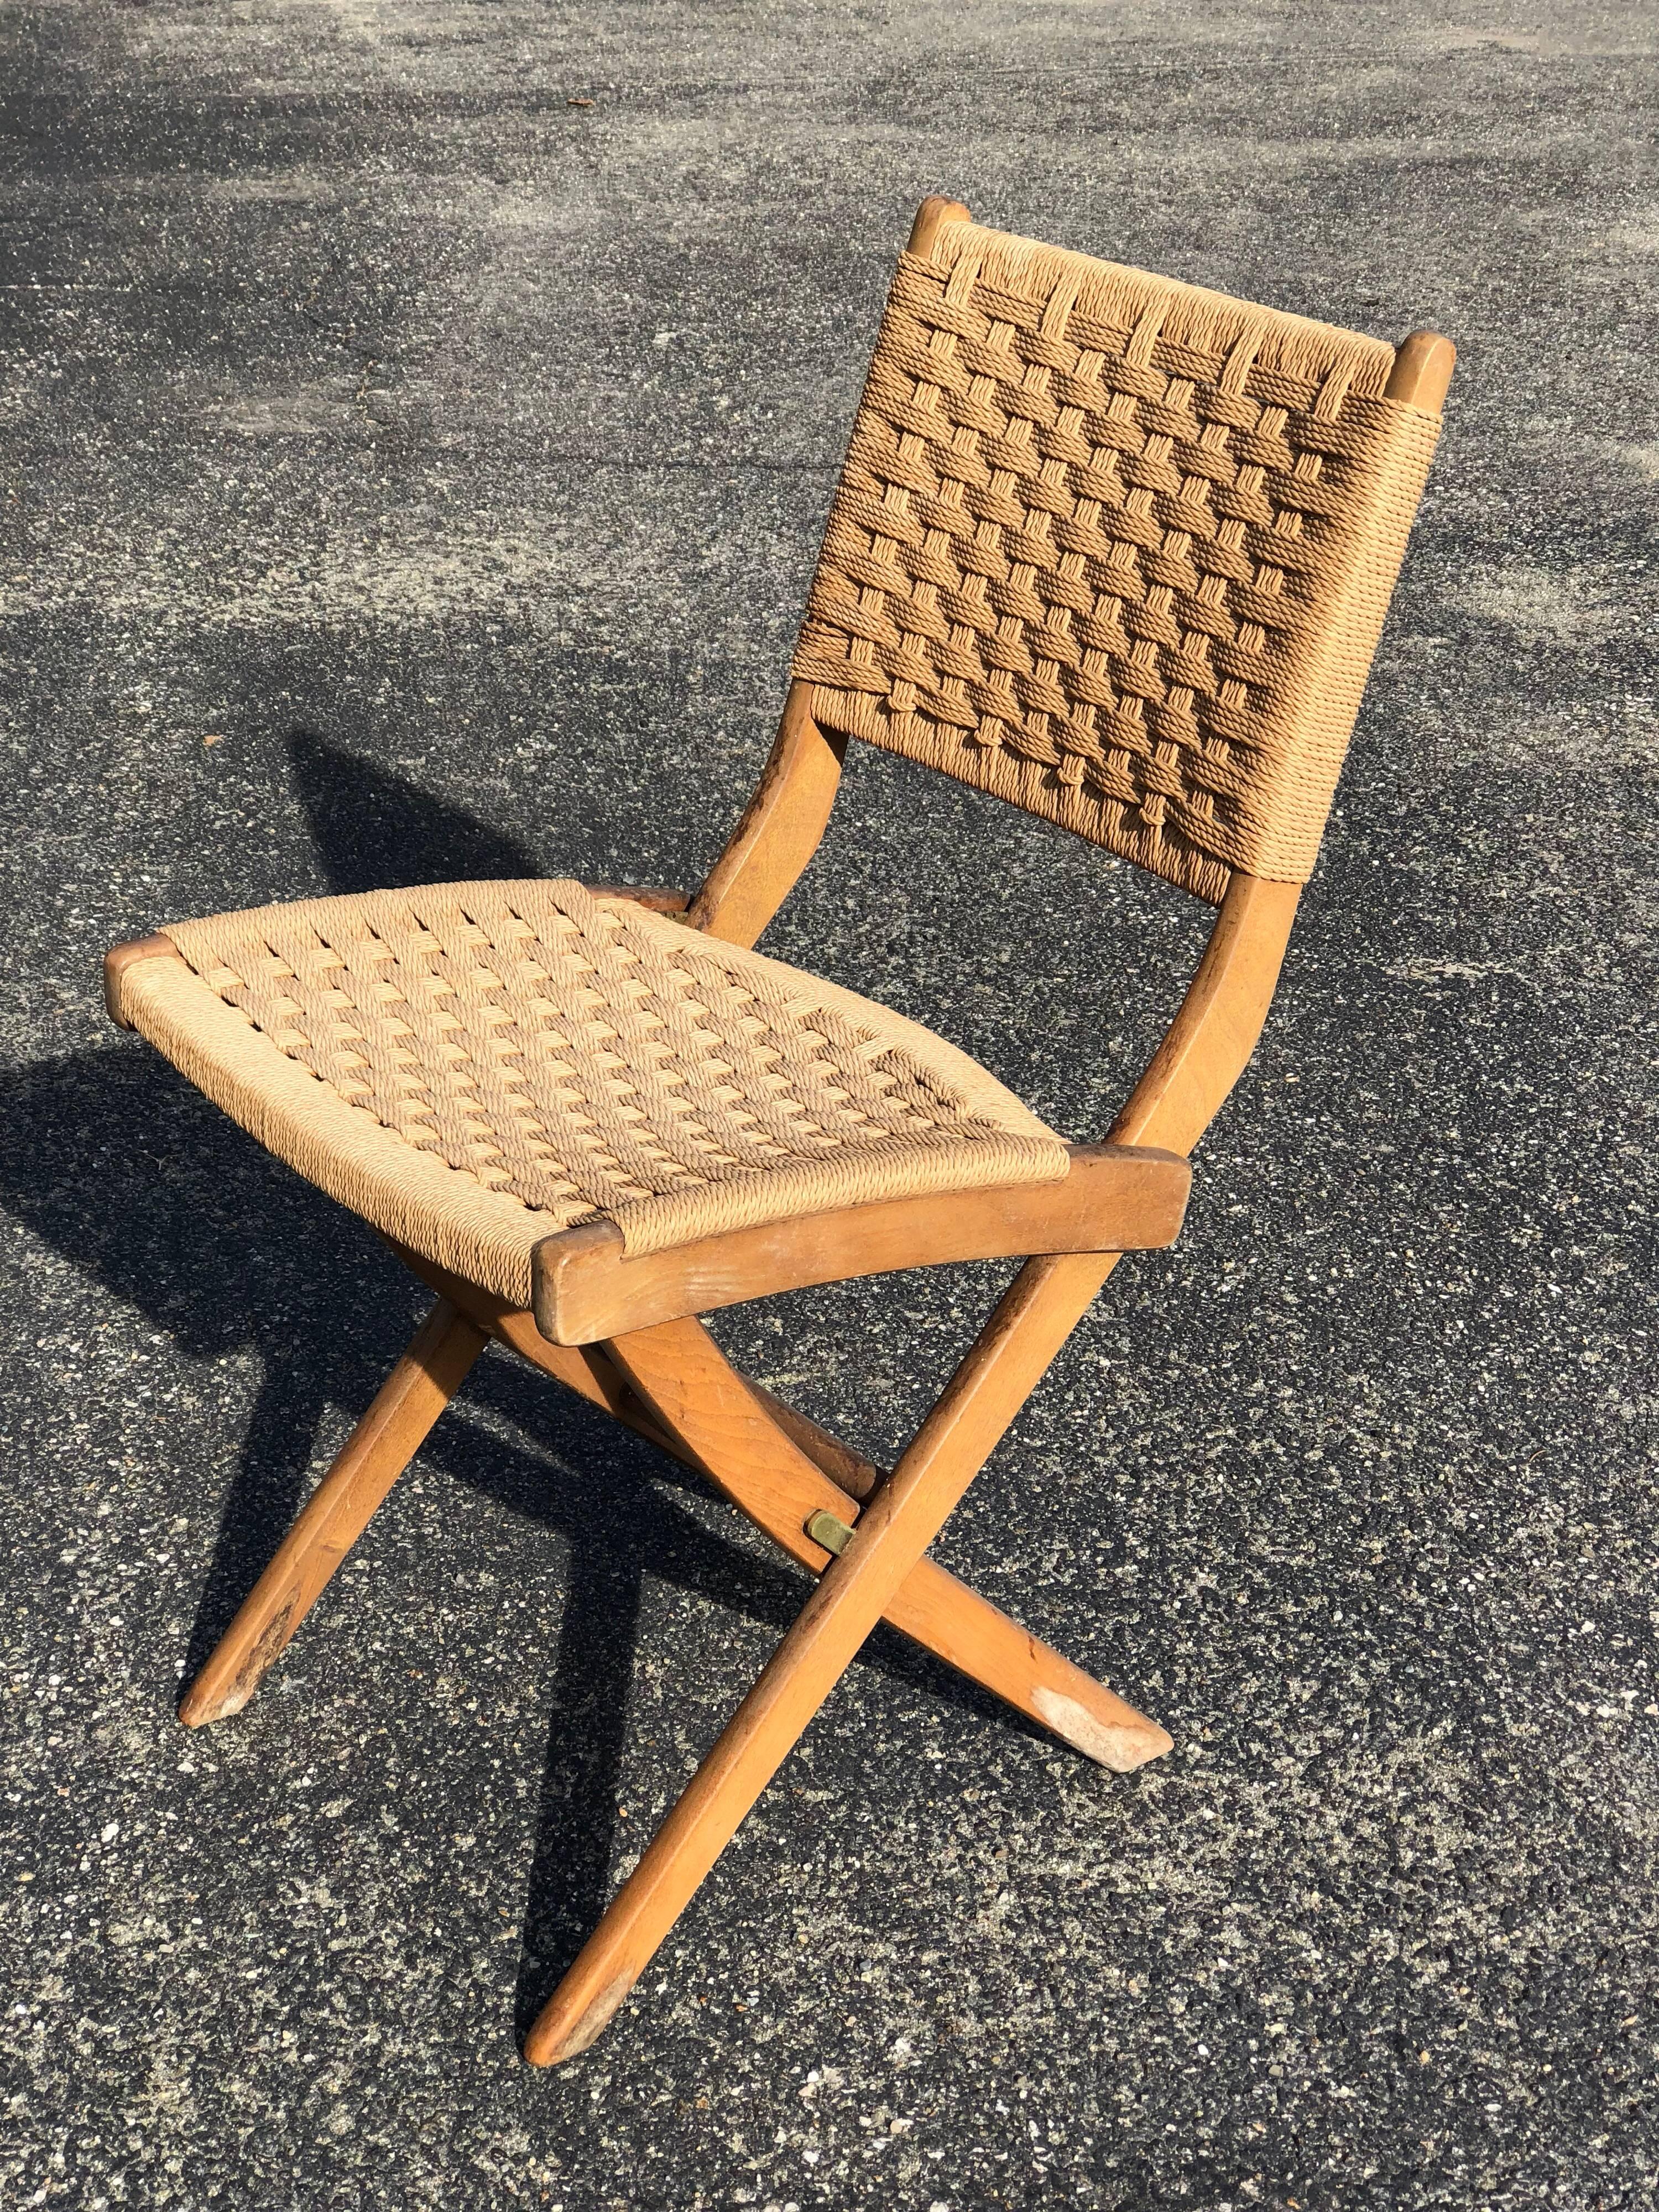 Hans Wegner style folding rope chair.